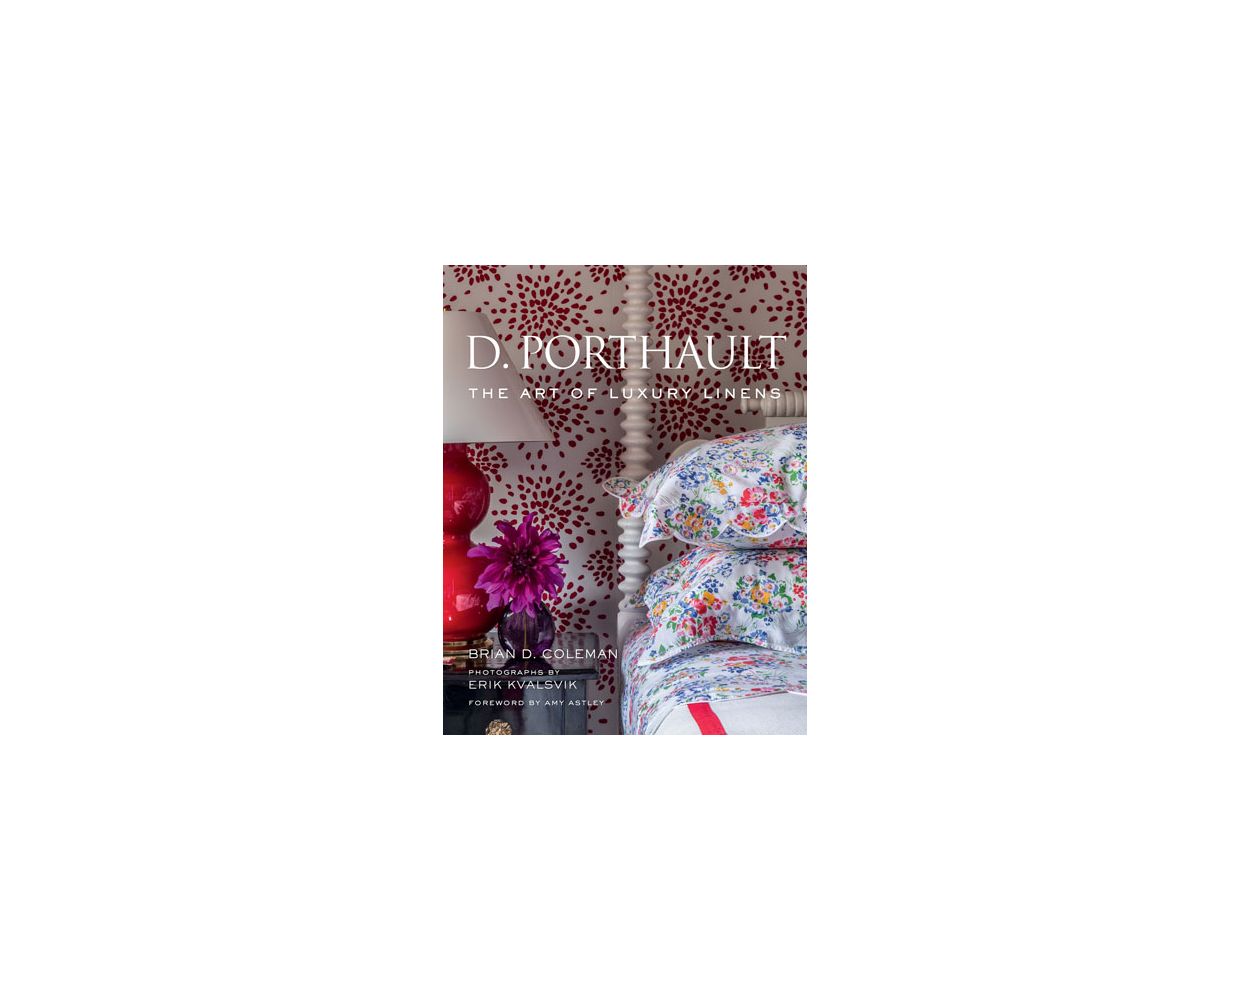 D. Porthault The Art Of Luxury Linens